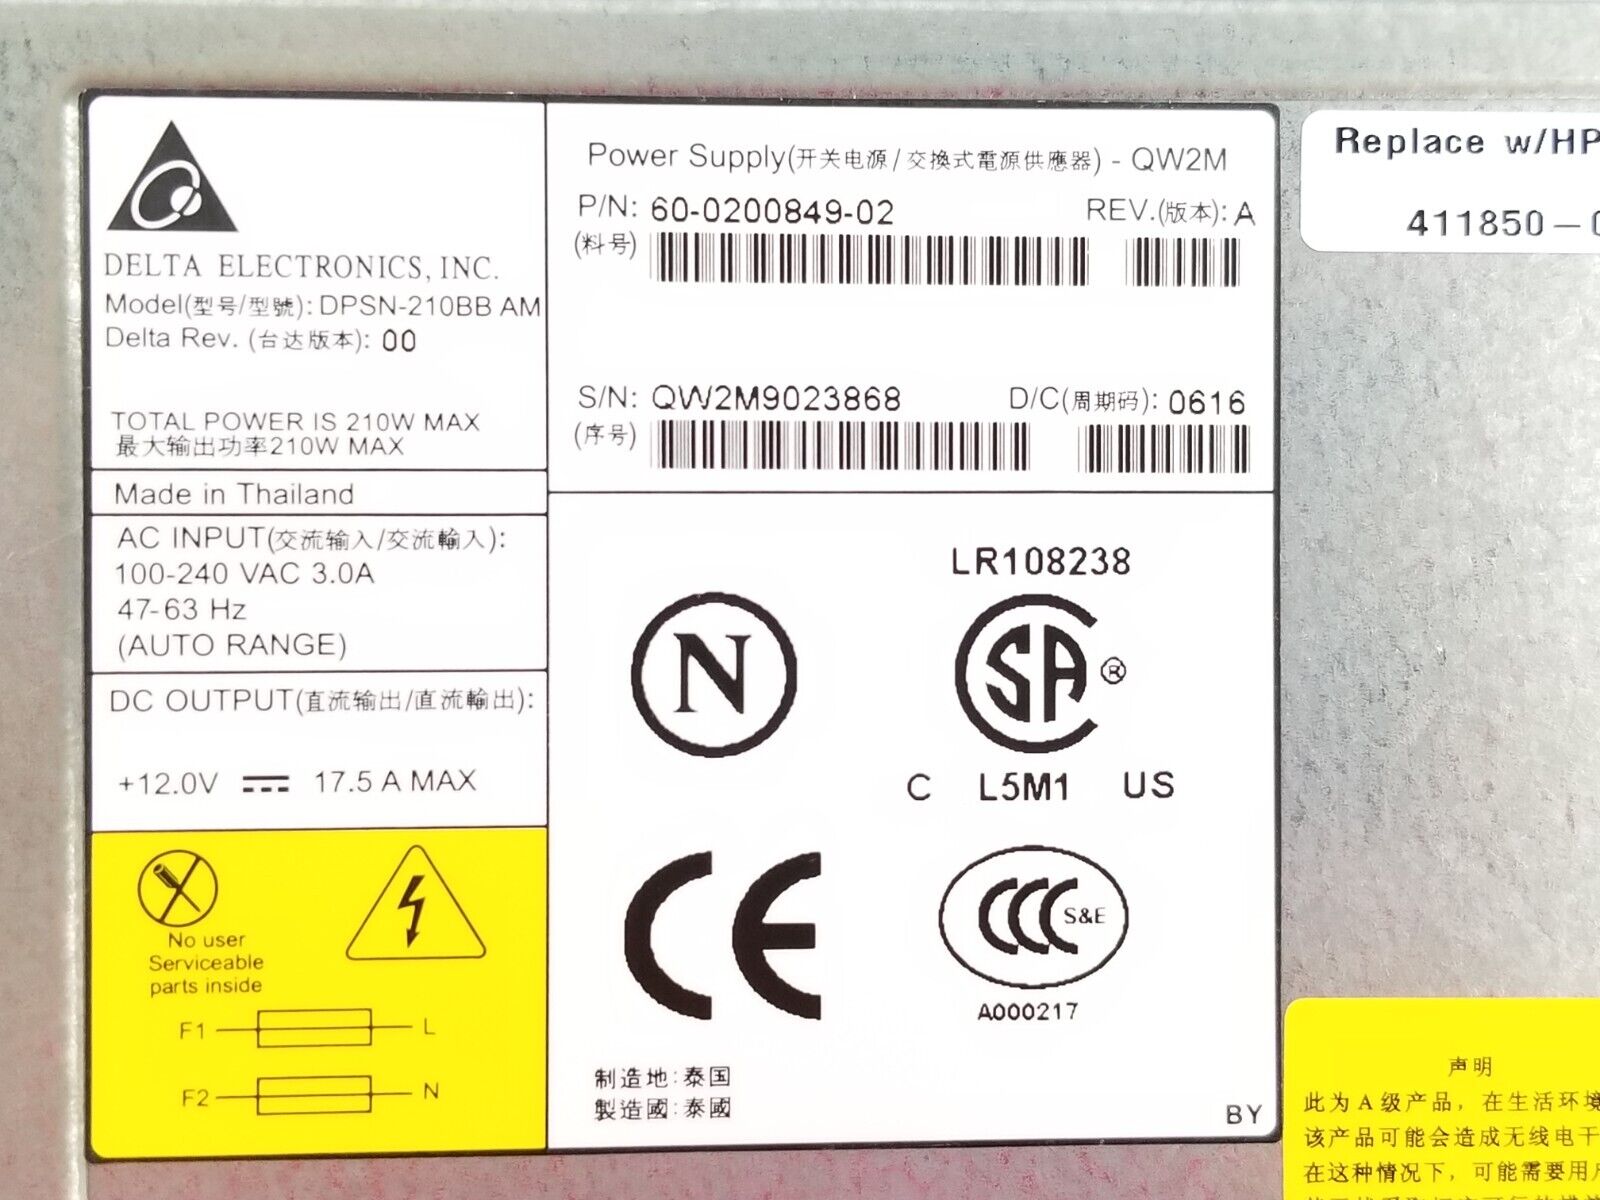 Lot of (2) HP 411850-001 Delta Electronics DPSN-210BB AM 210W Power Supply